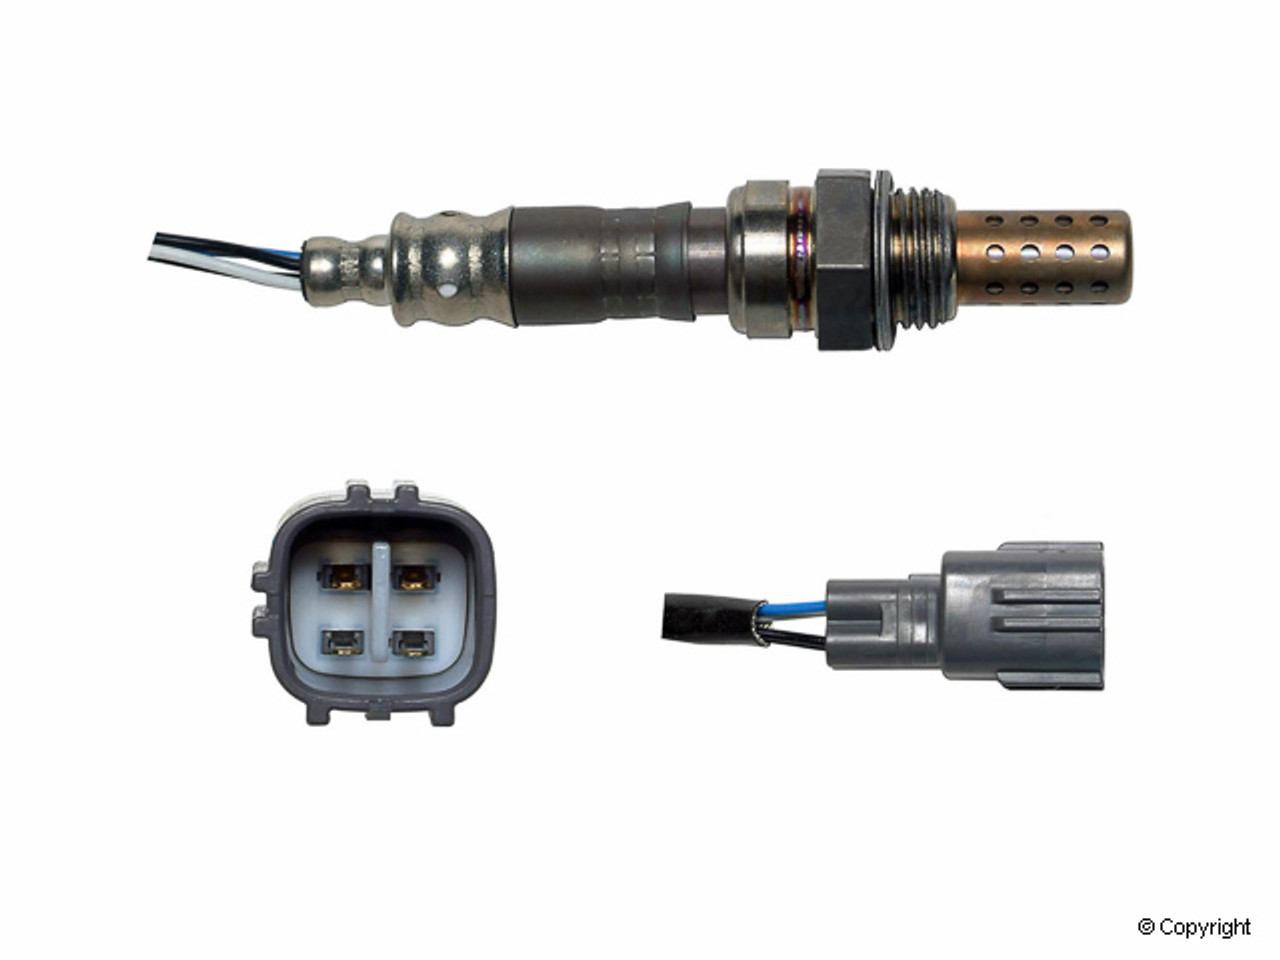 Toyota Rear Denso Heated Oxygen Sensor w/OE connector; 4 Wire; 239mm wire length - 2344260

